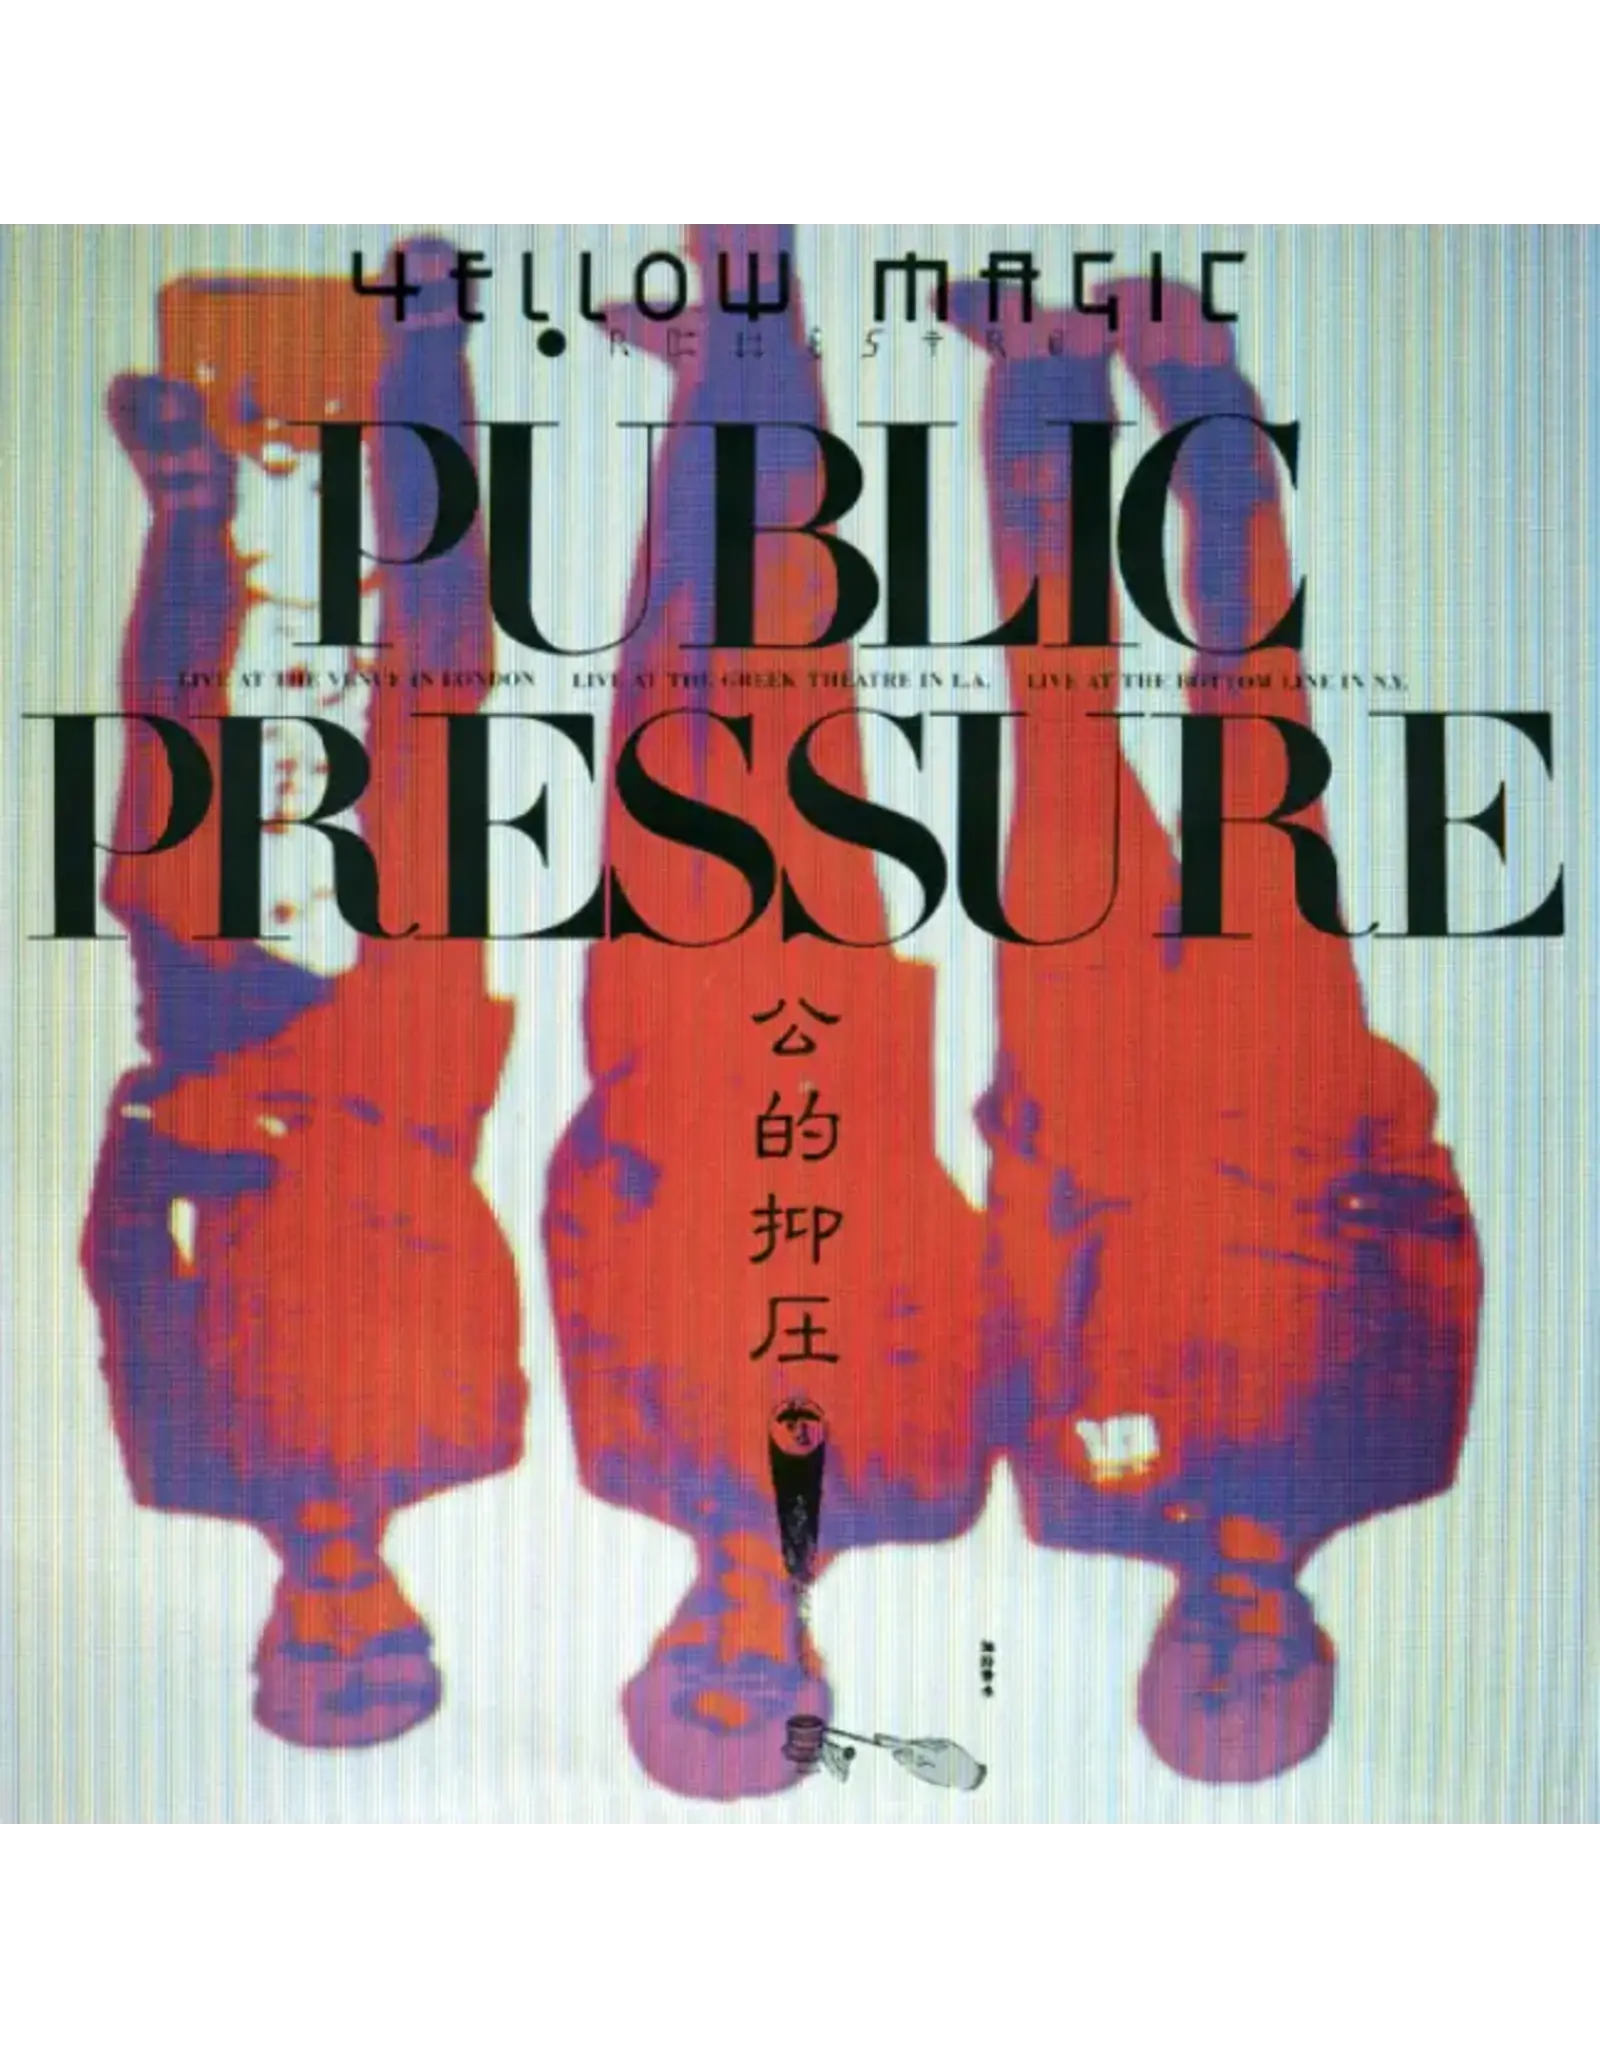 Great Tracks Yellow Magic Orchestra: Public Pressure LP